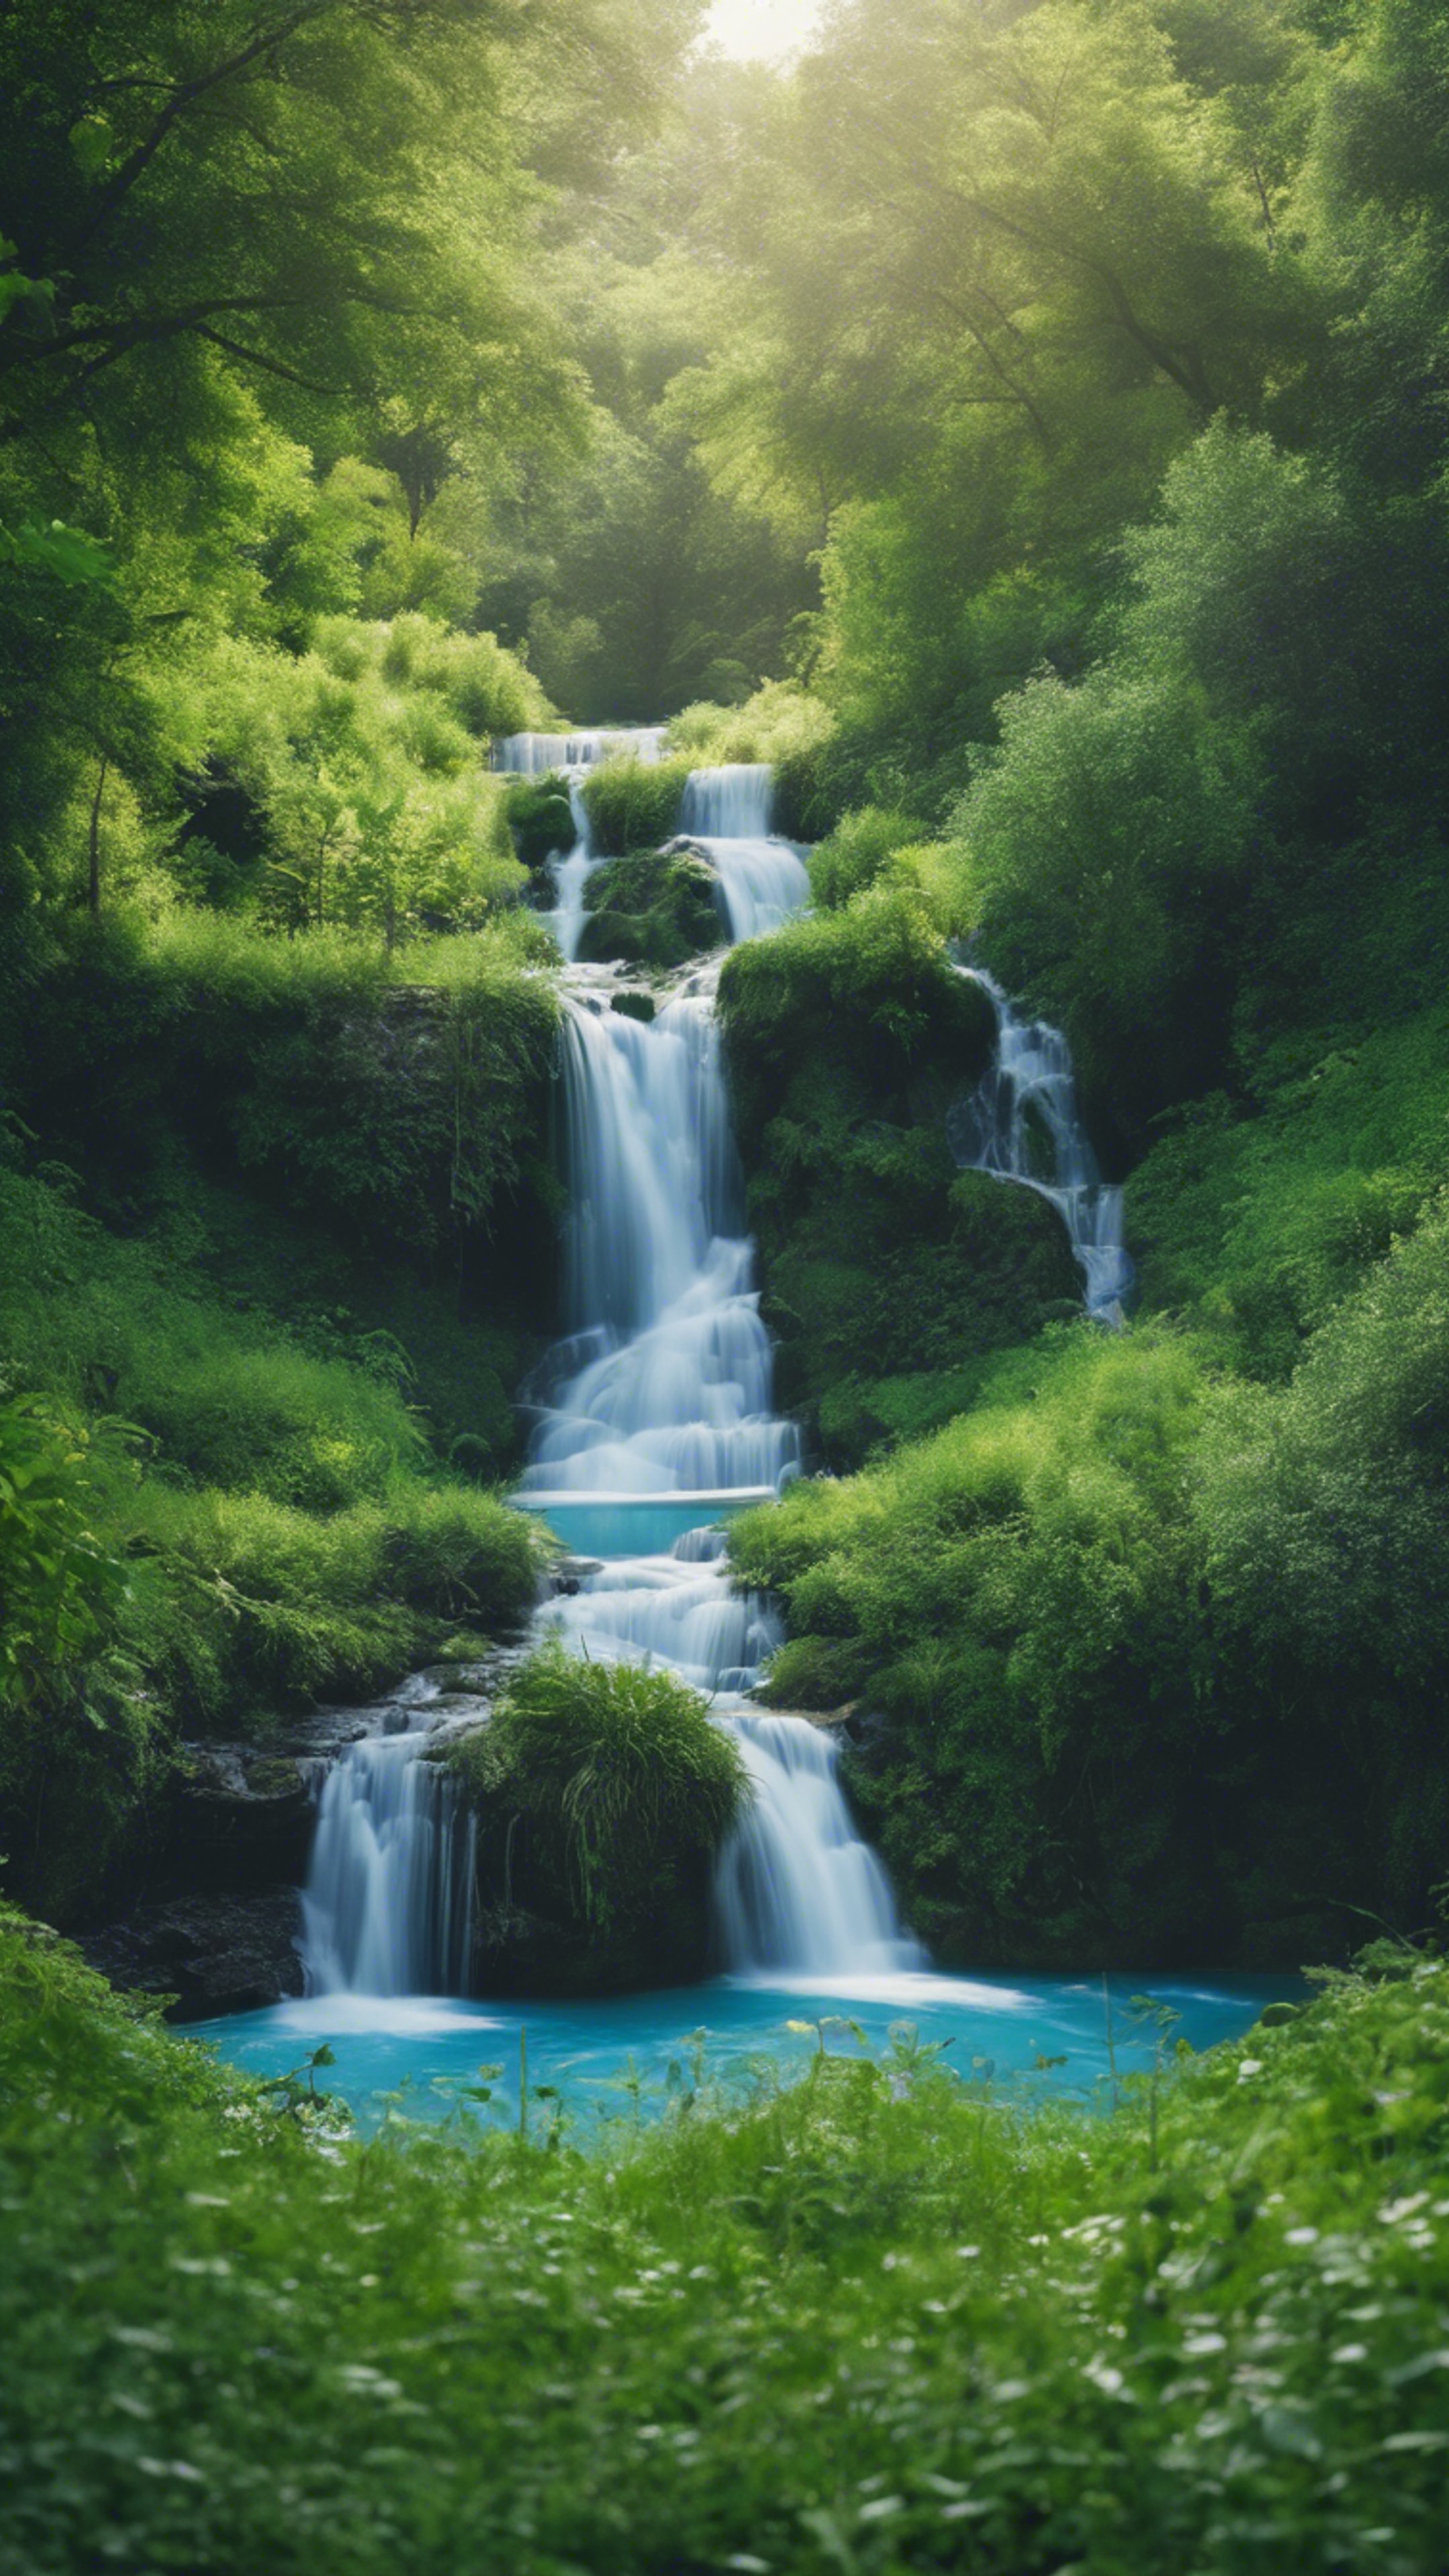 A cool blue waterfall cascading into a lush green meadow. Hintergrund[661f80b9c31c460db5eb]